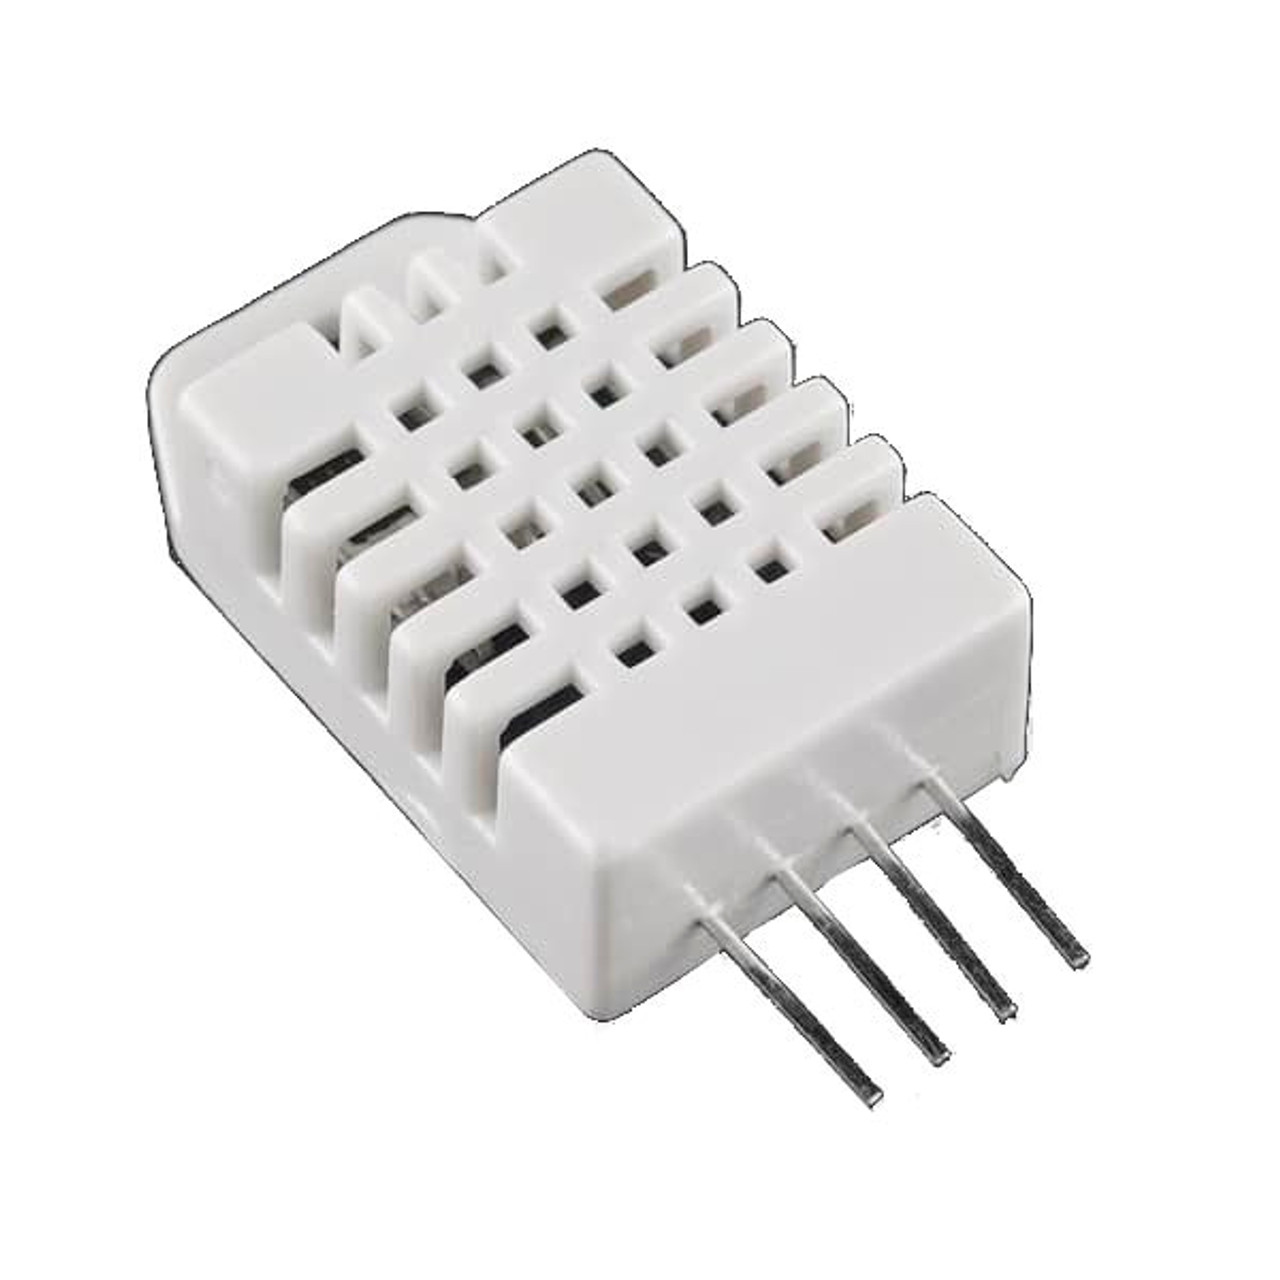 Temperature Sensor - TMP36 - SEN-10988 - SparkFun Electronics